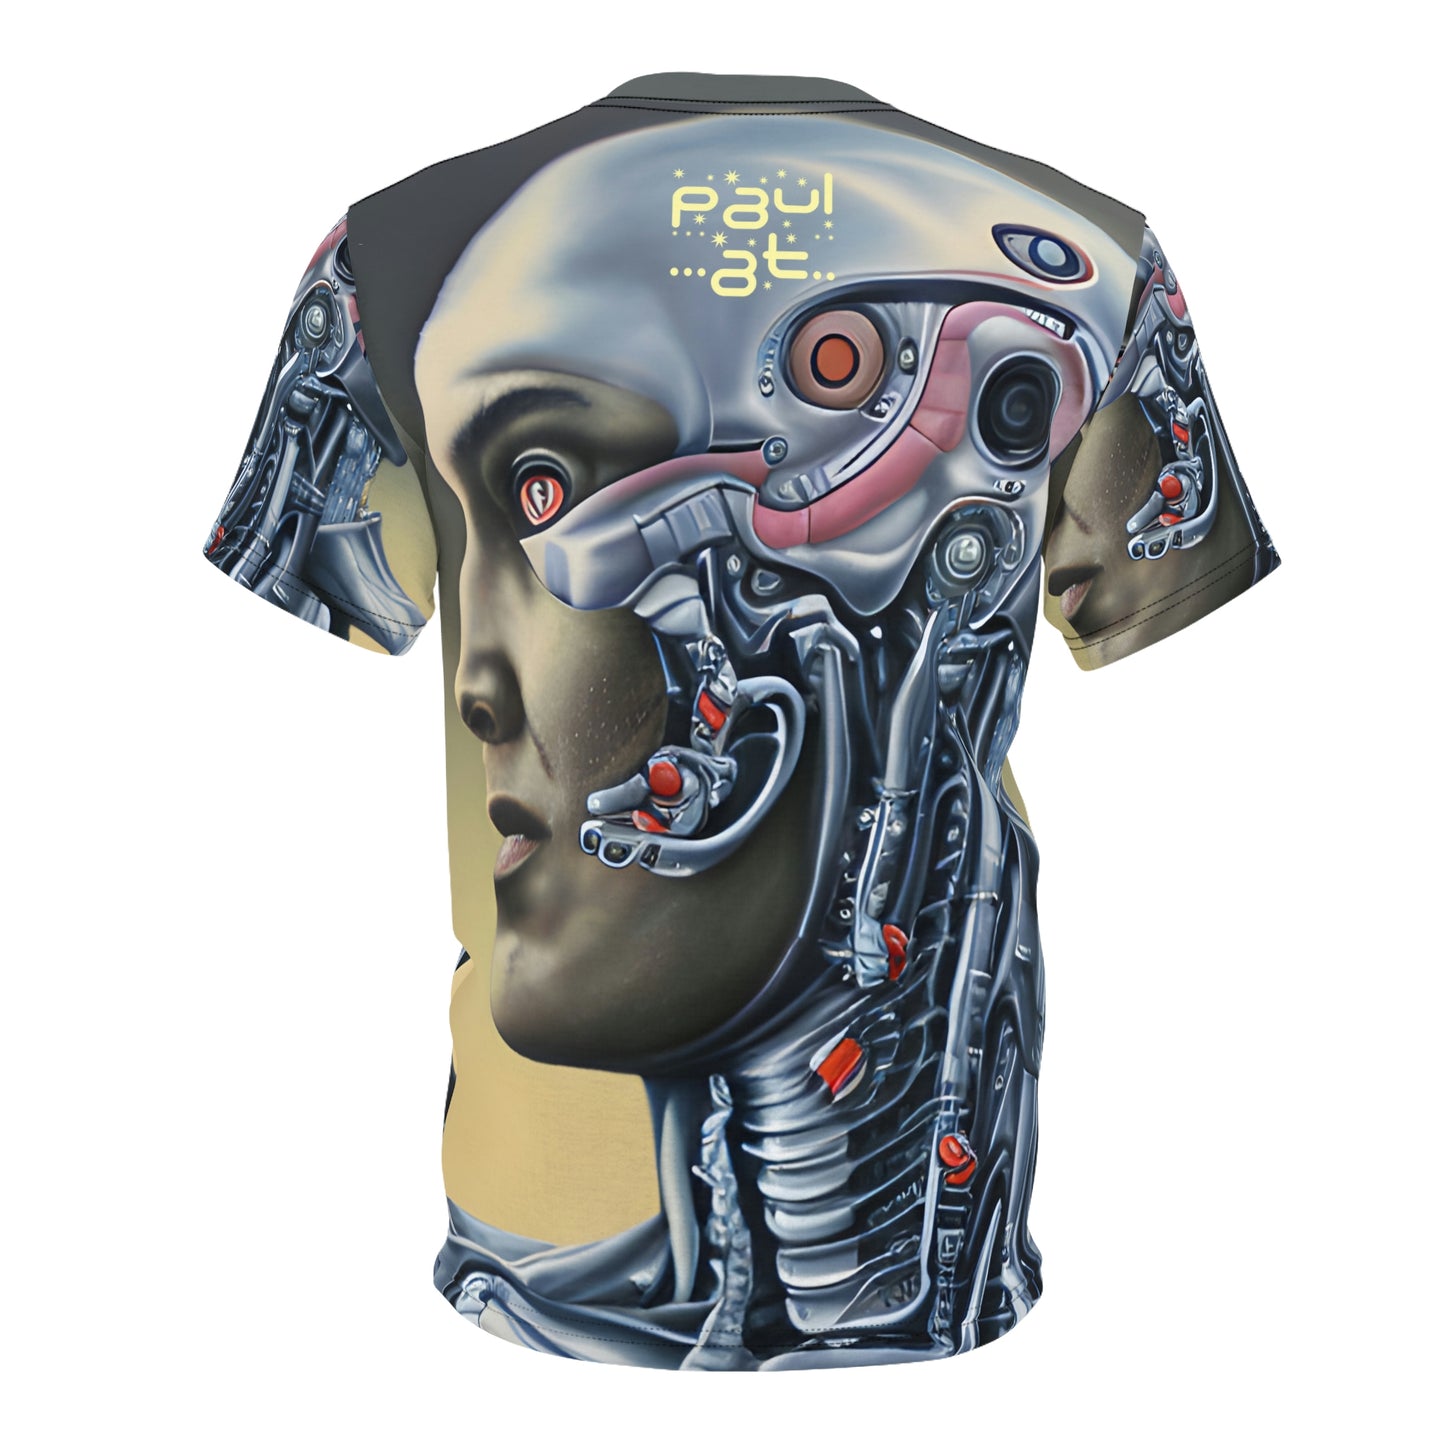 Cyborg Realism Unisex T-Shirt